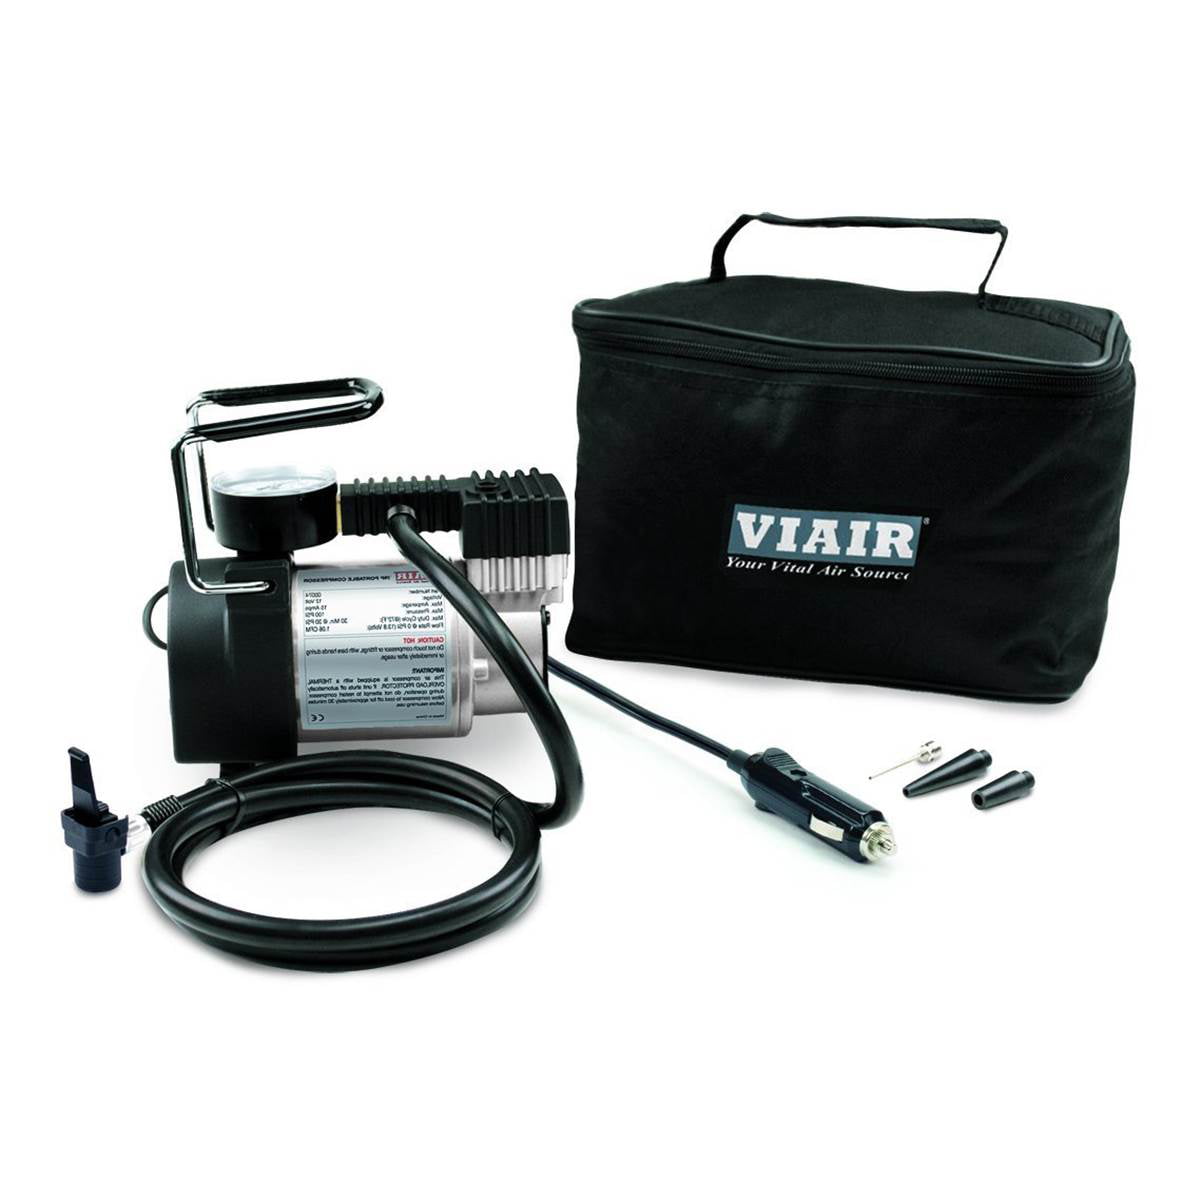 Viair 74P Portable 100 psi 1.27 CFM Compressor Kit For Passenger Car Tires 00074 